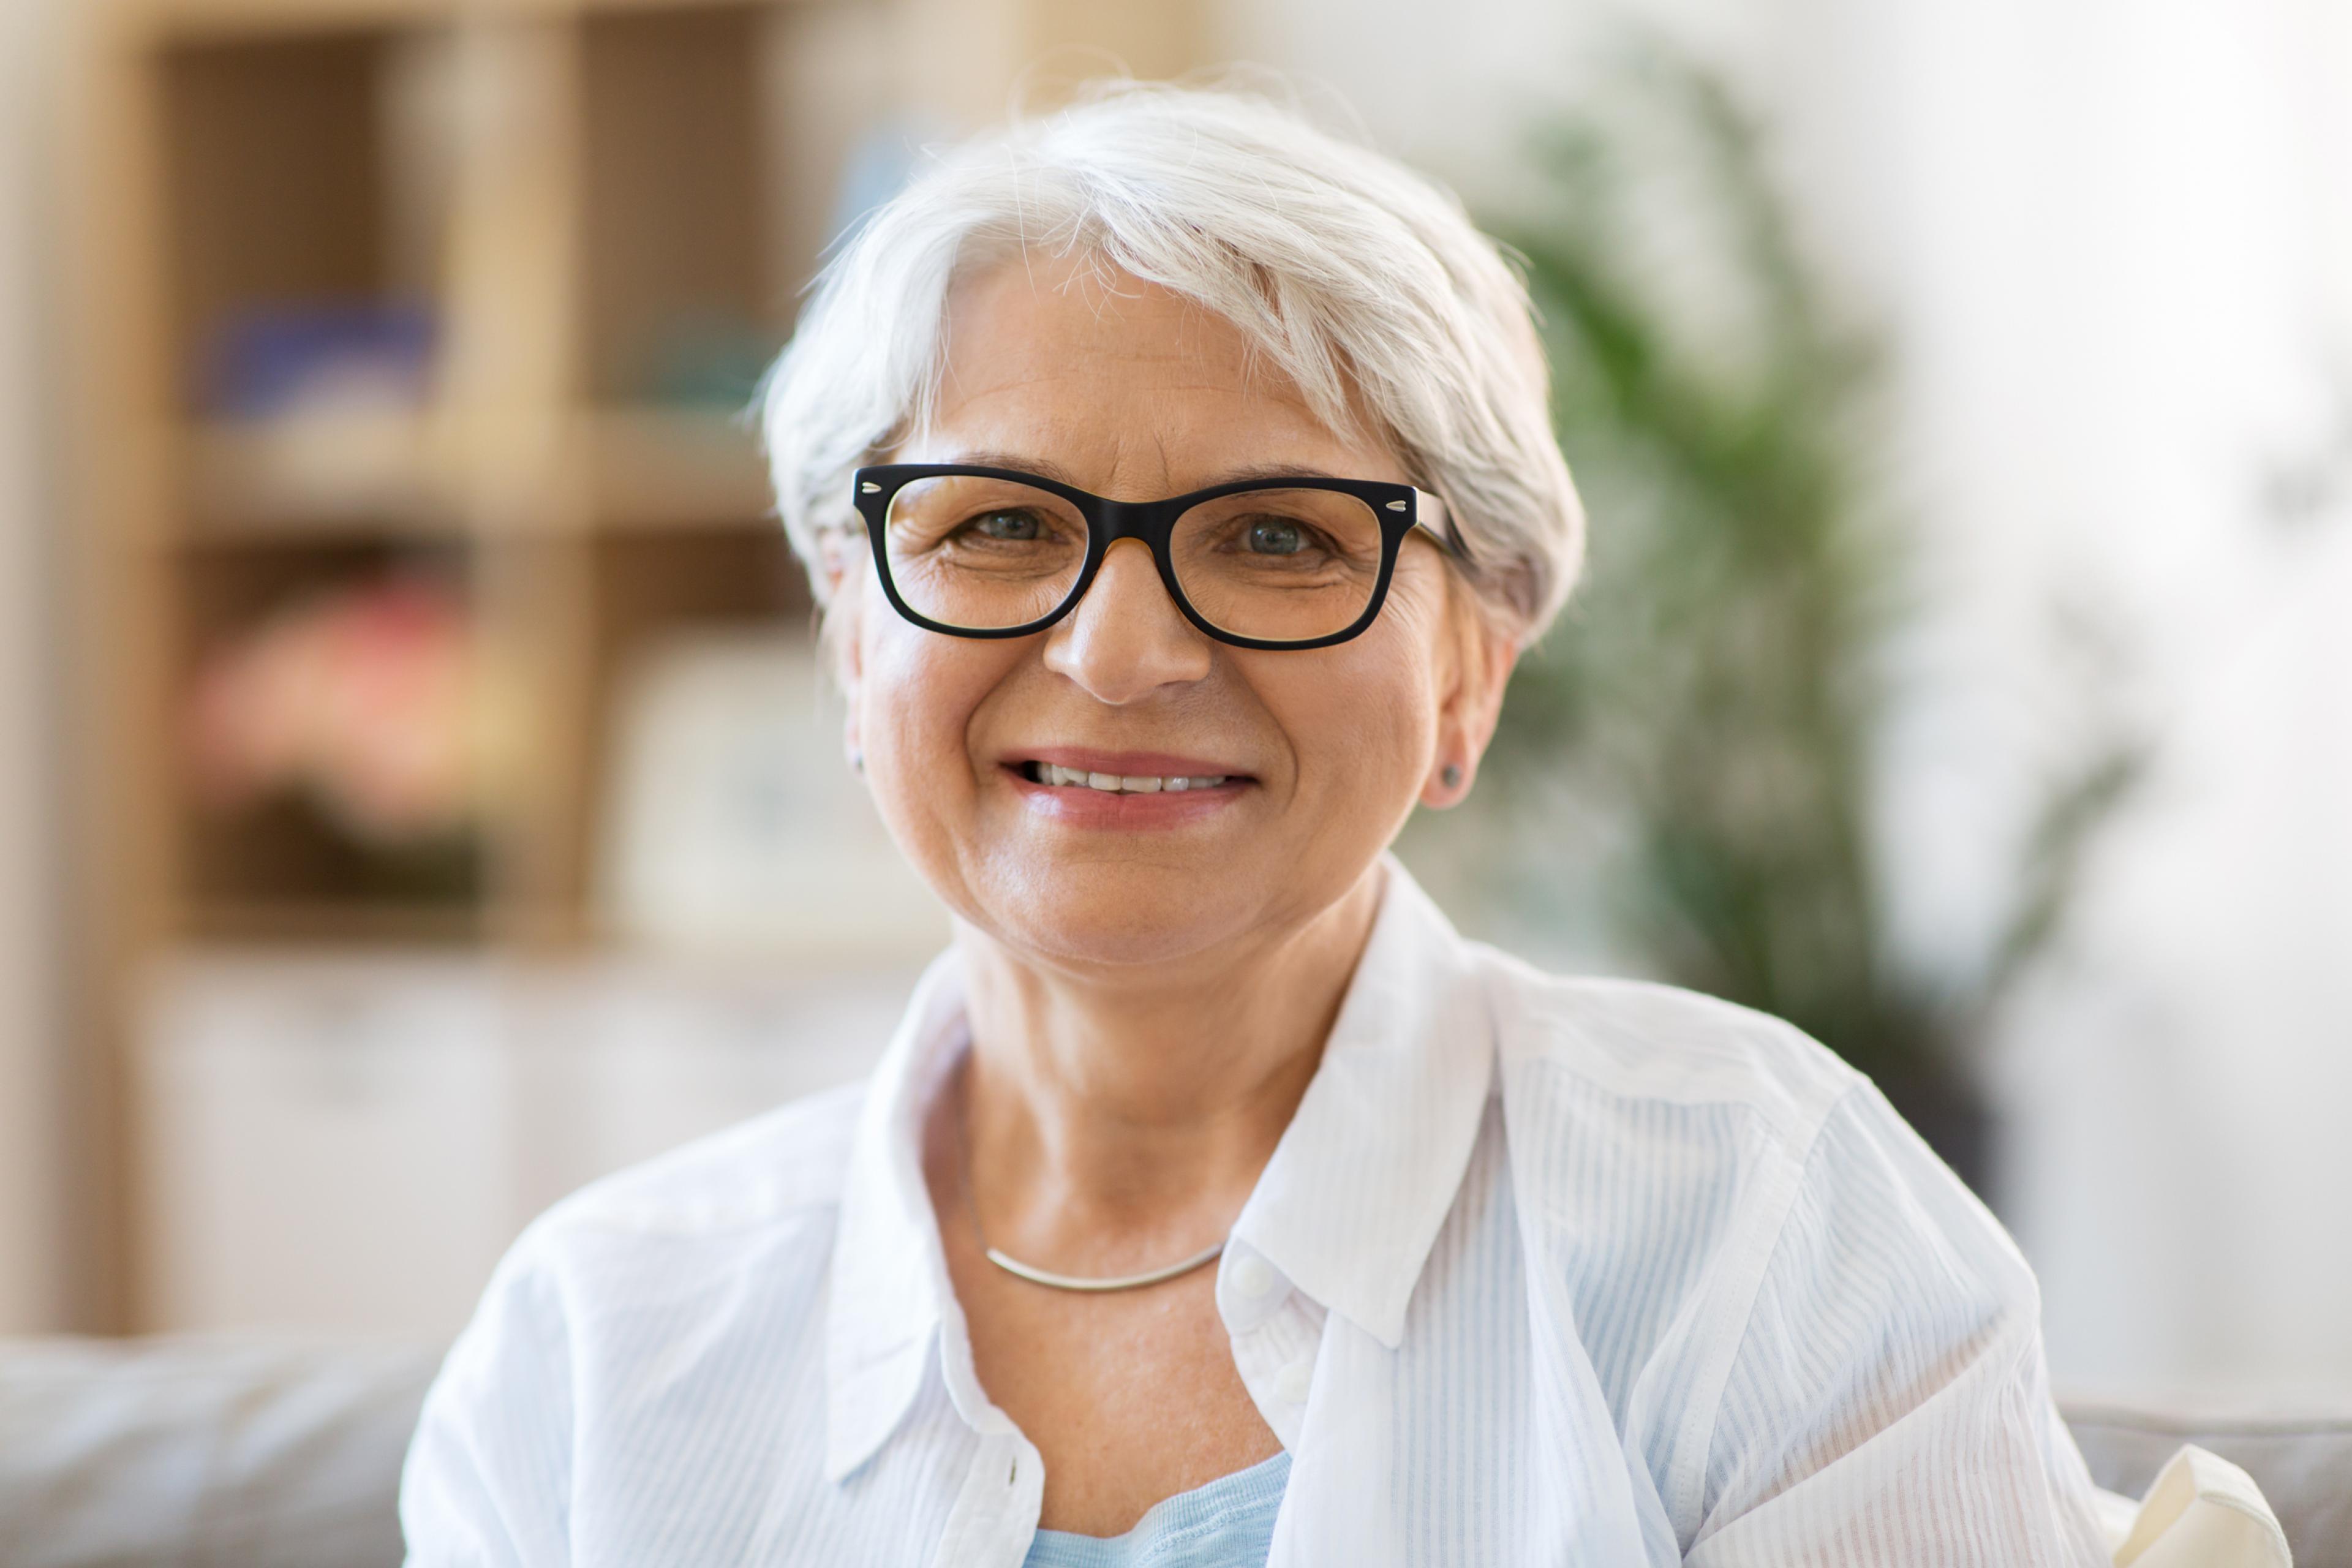 Elderly woman in glasses smiling